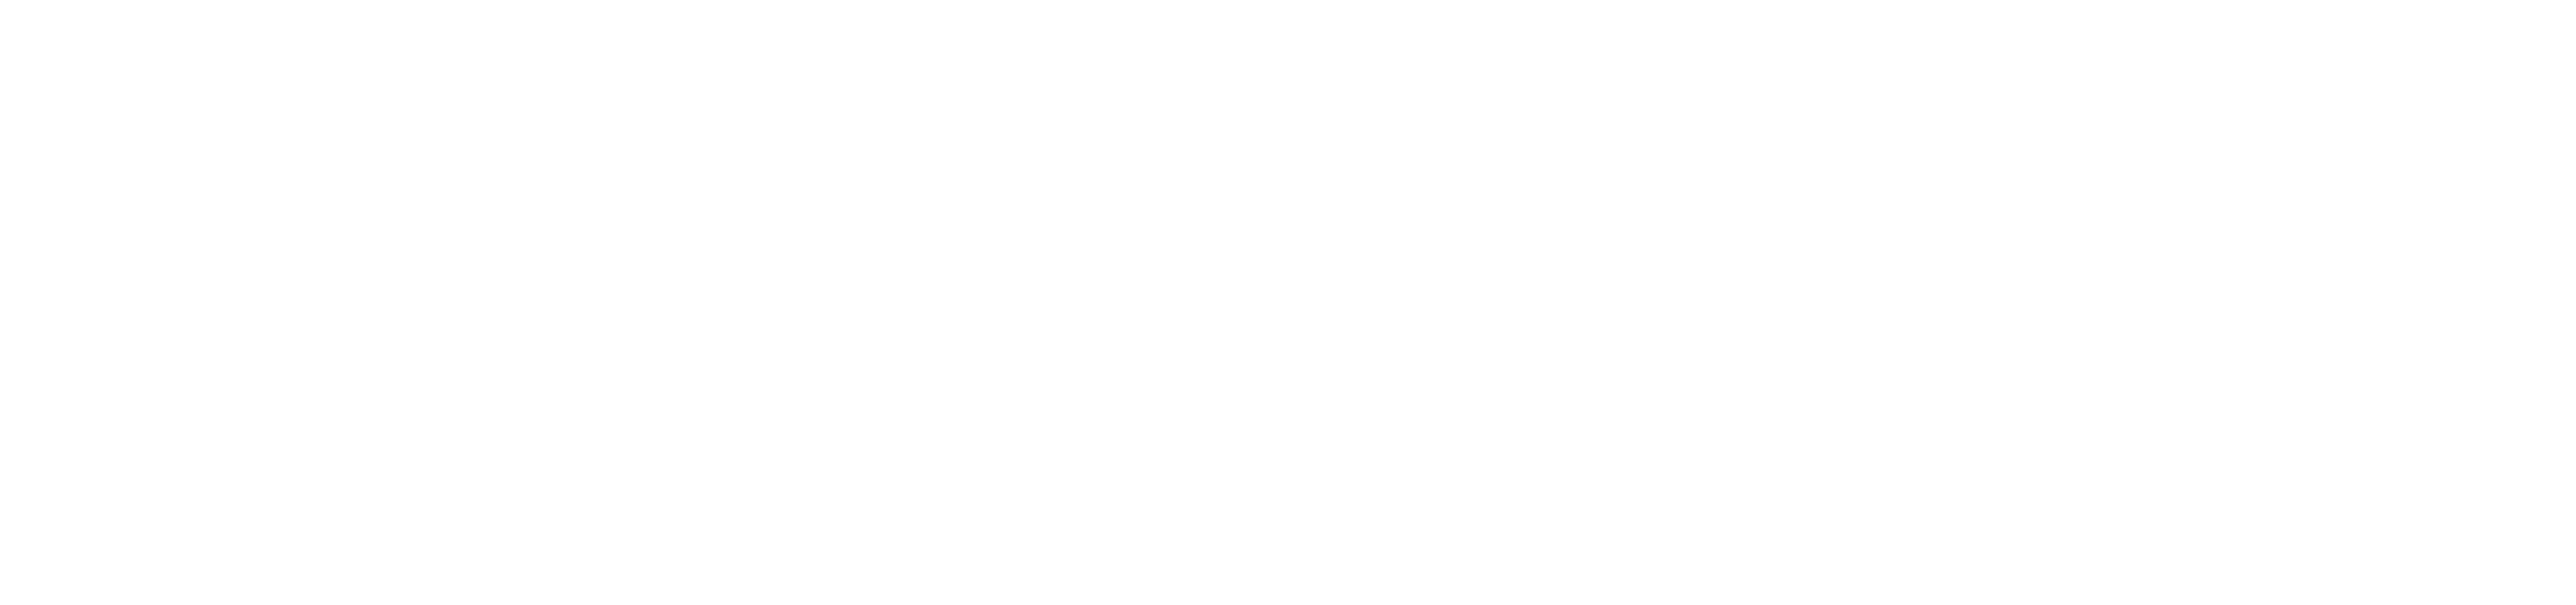 Fornybar Norge logo